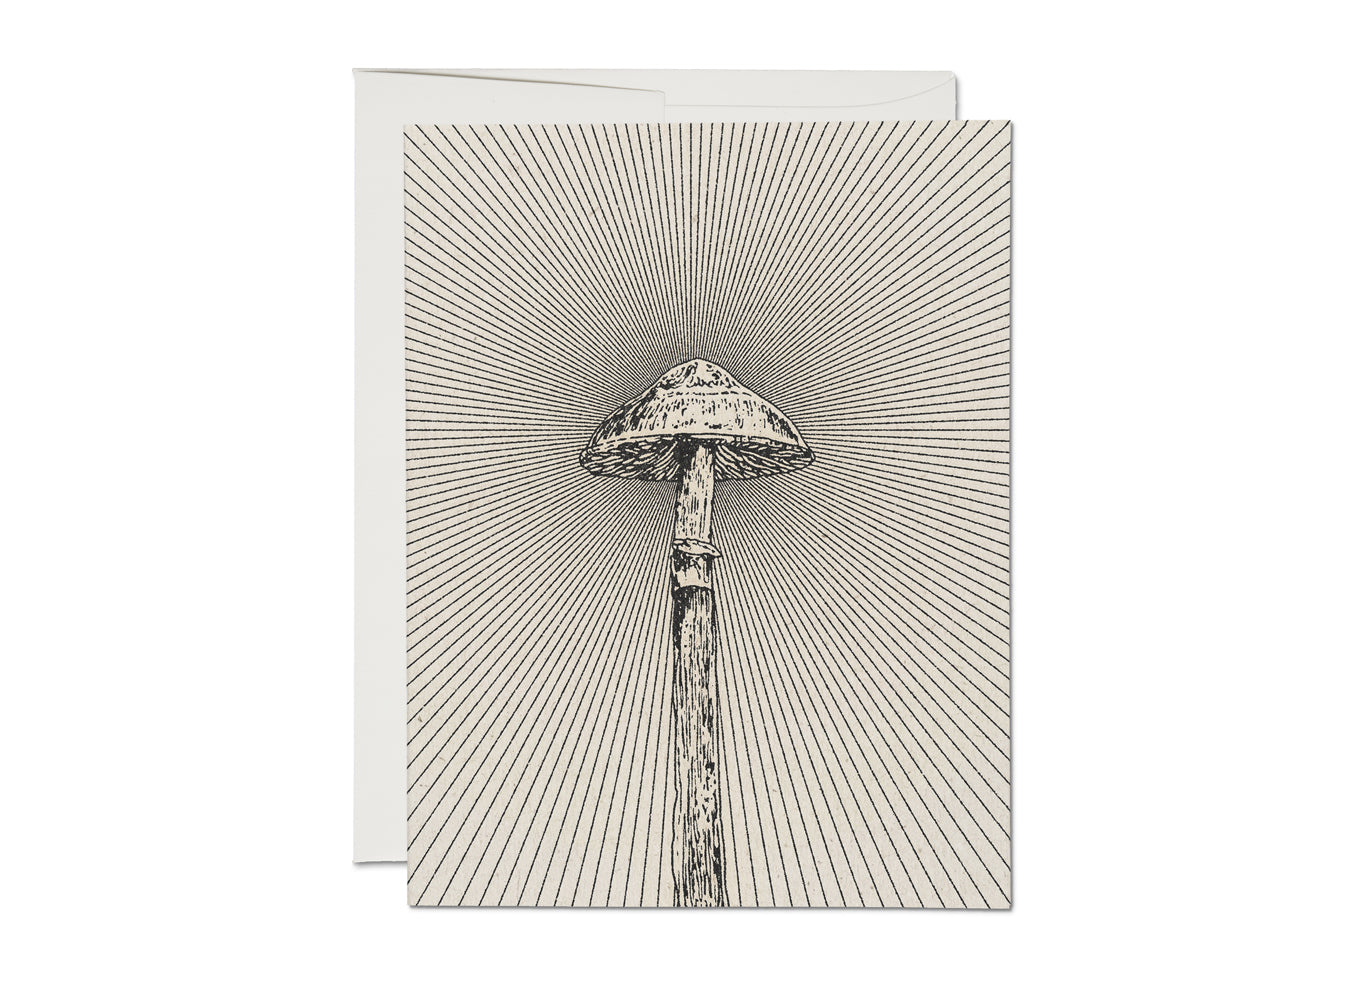 Red Cap Cards “Mushroom” Card